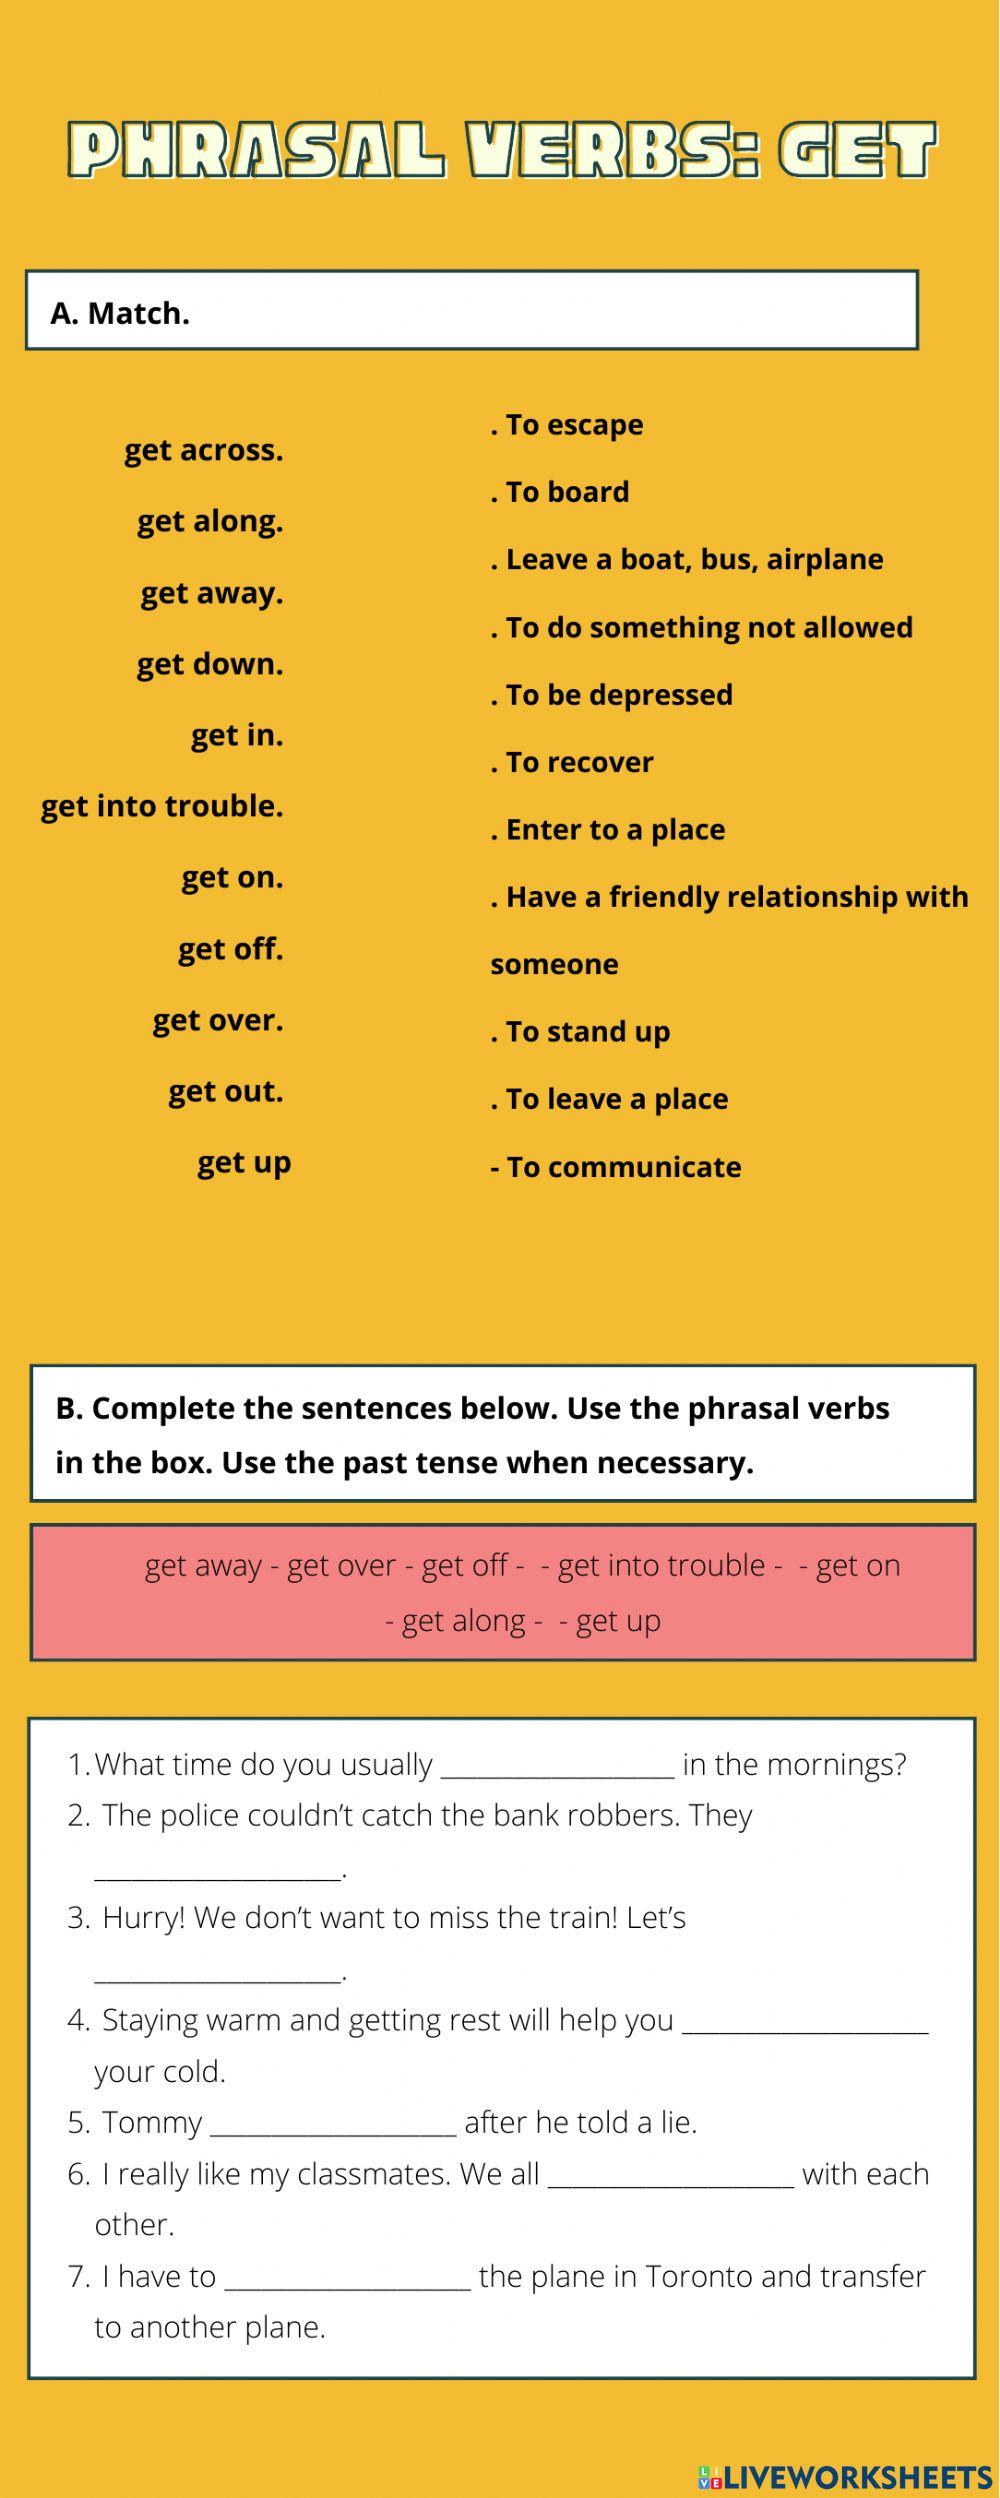 Phrasal verbs: get